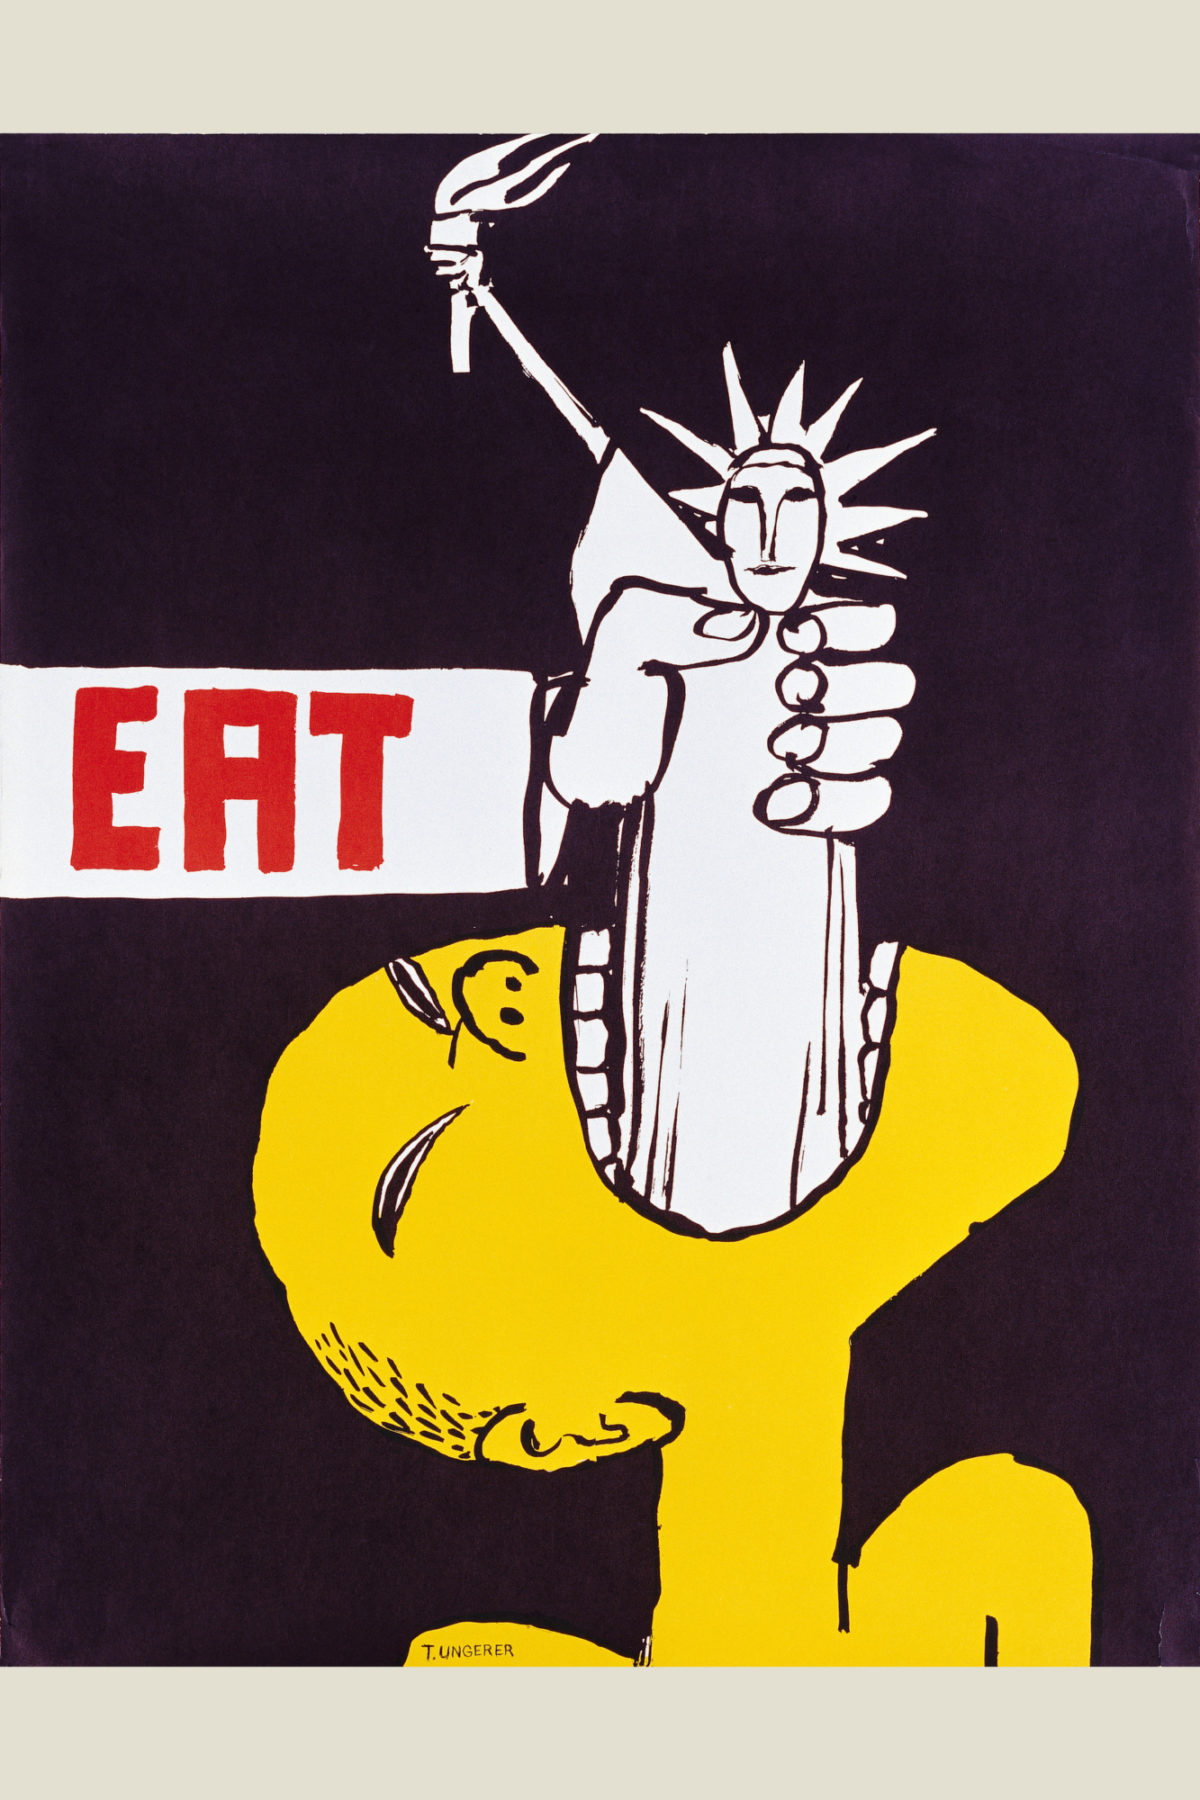 Wall-Street-International-Eat-1967